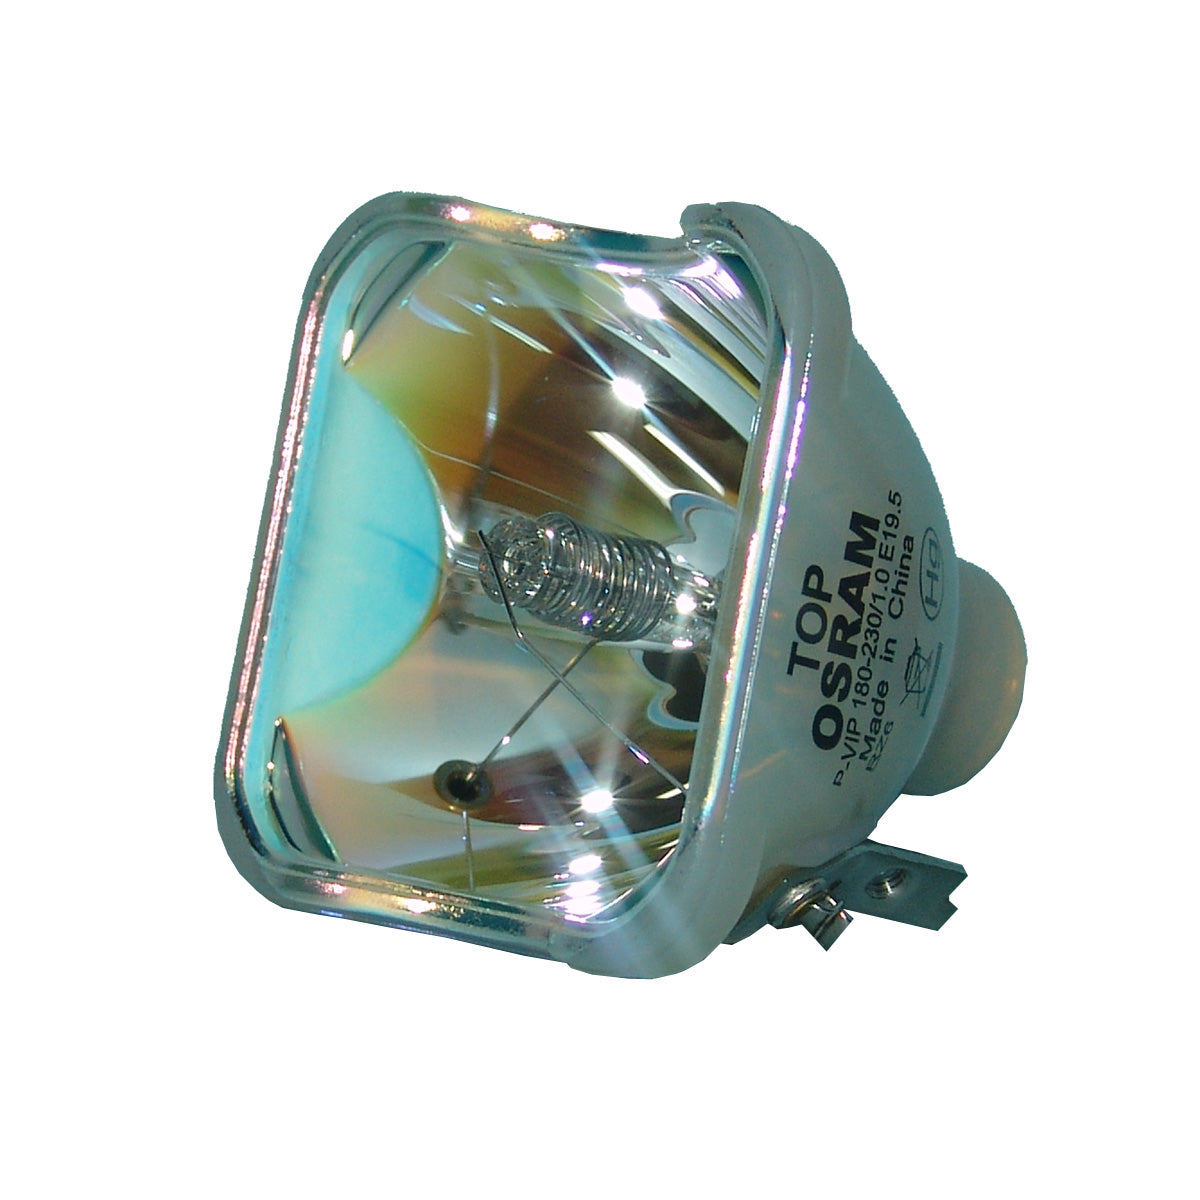 3M 78-6972-0118-0 Osram Projector Bare Lamp